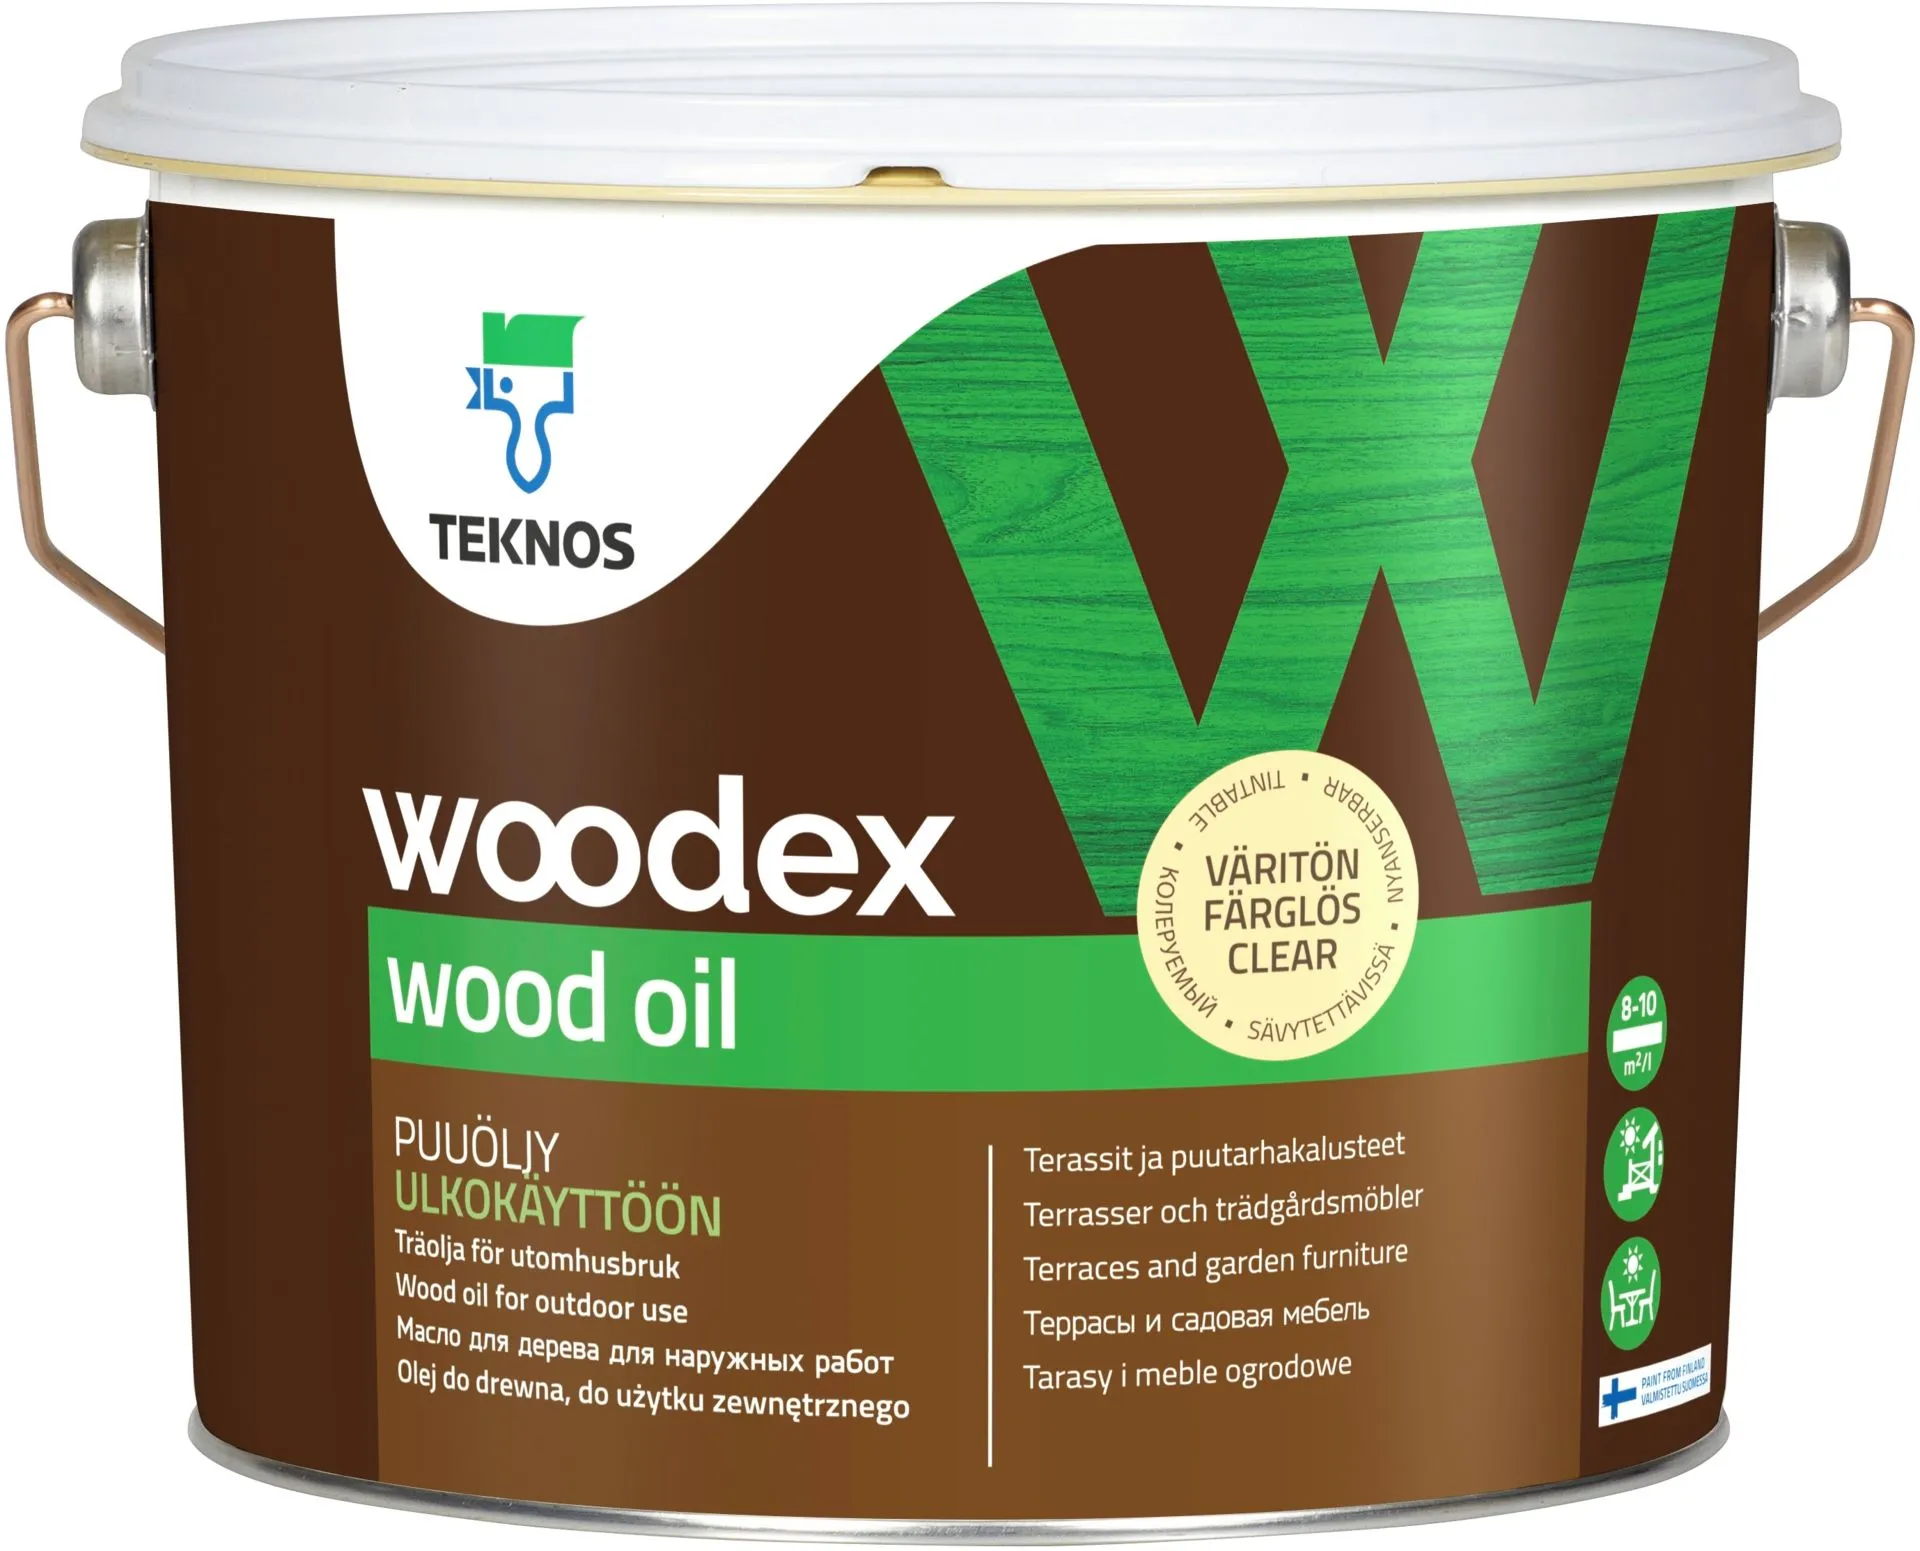 Teknos puuöljy Woodex Wood Oil  2,7 l väritön